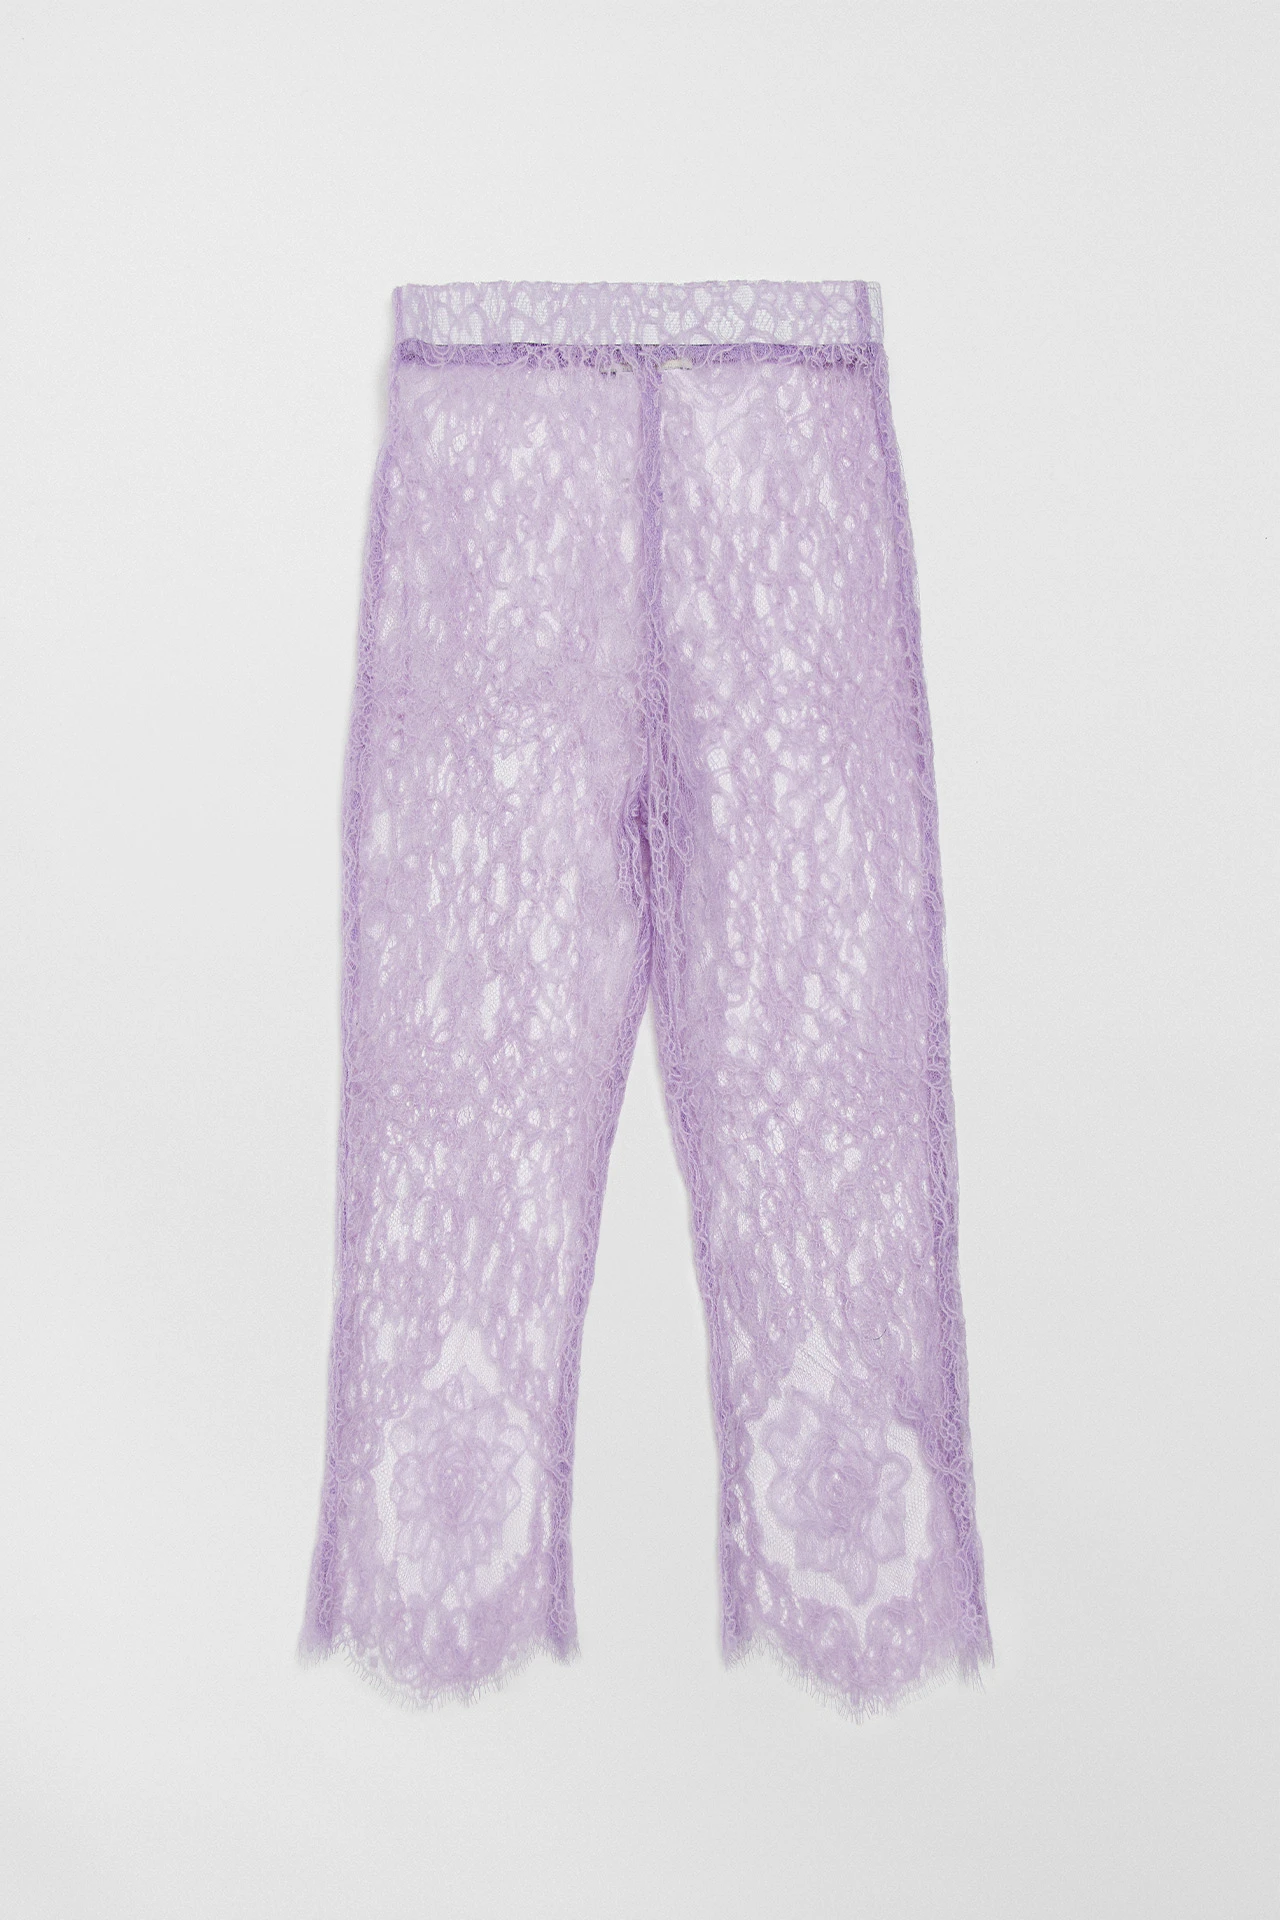 Miista-matilde-lilac-trousers-01